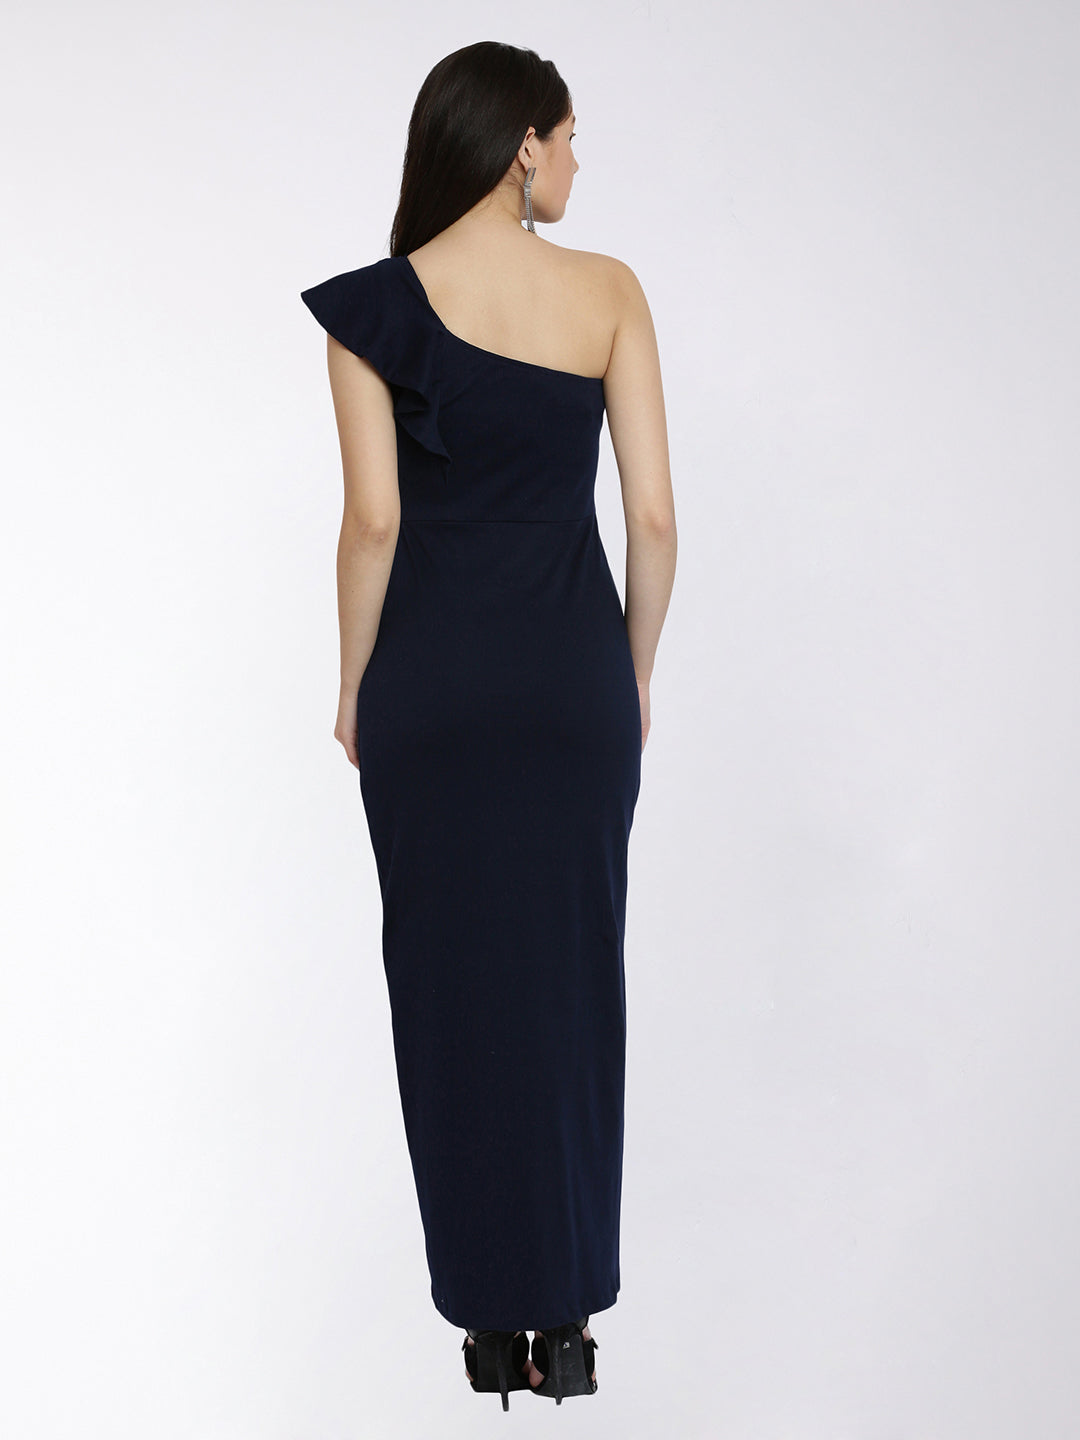 Women's Navy Blue Solid One Shoulder Sleeveless Ruffled Maxi Dress